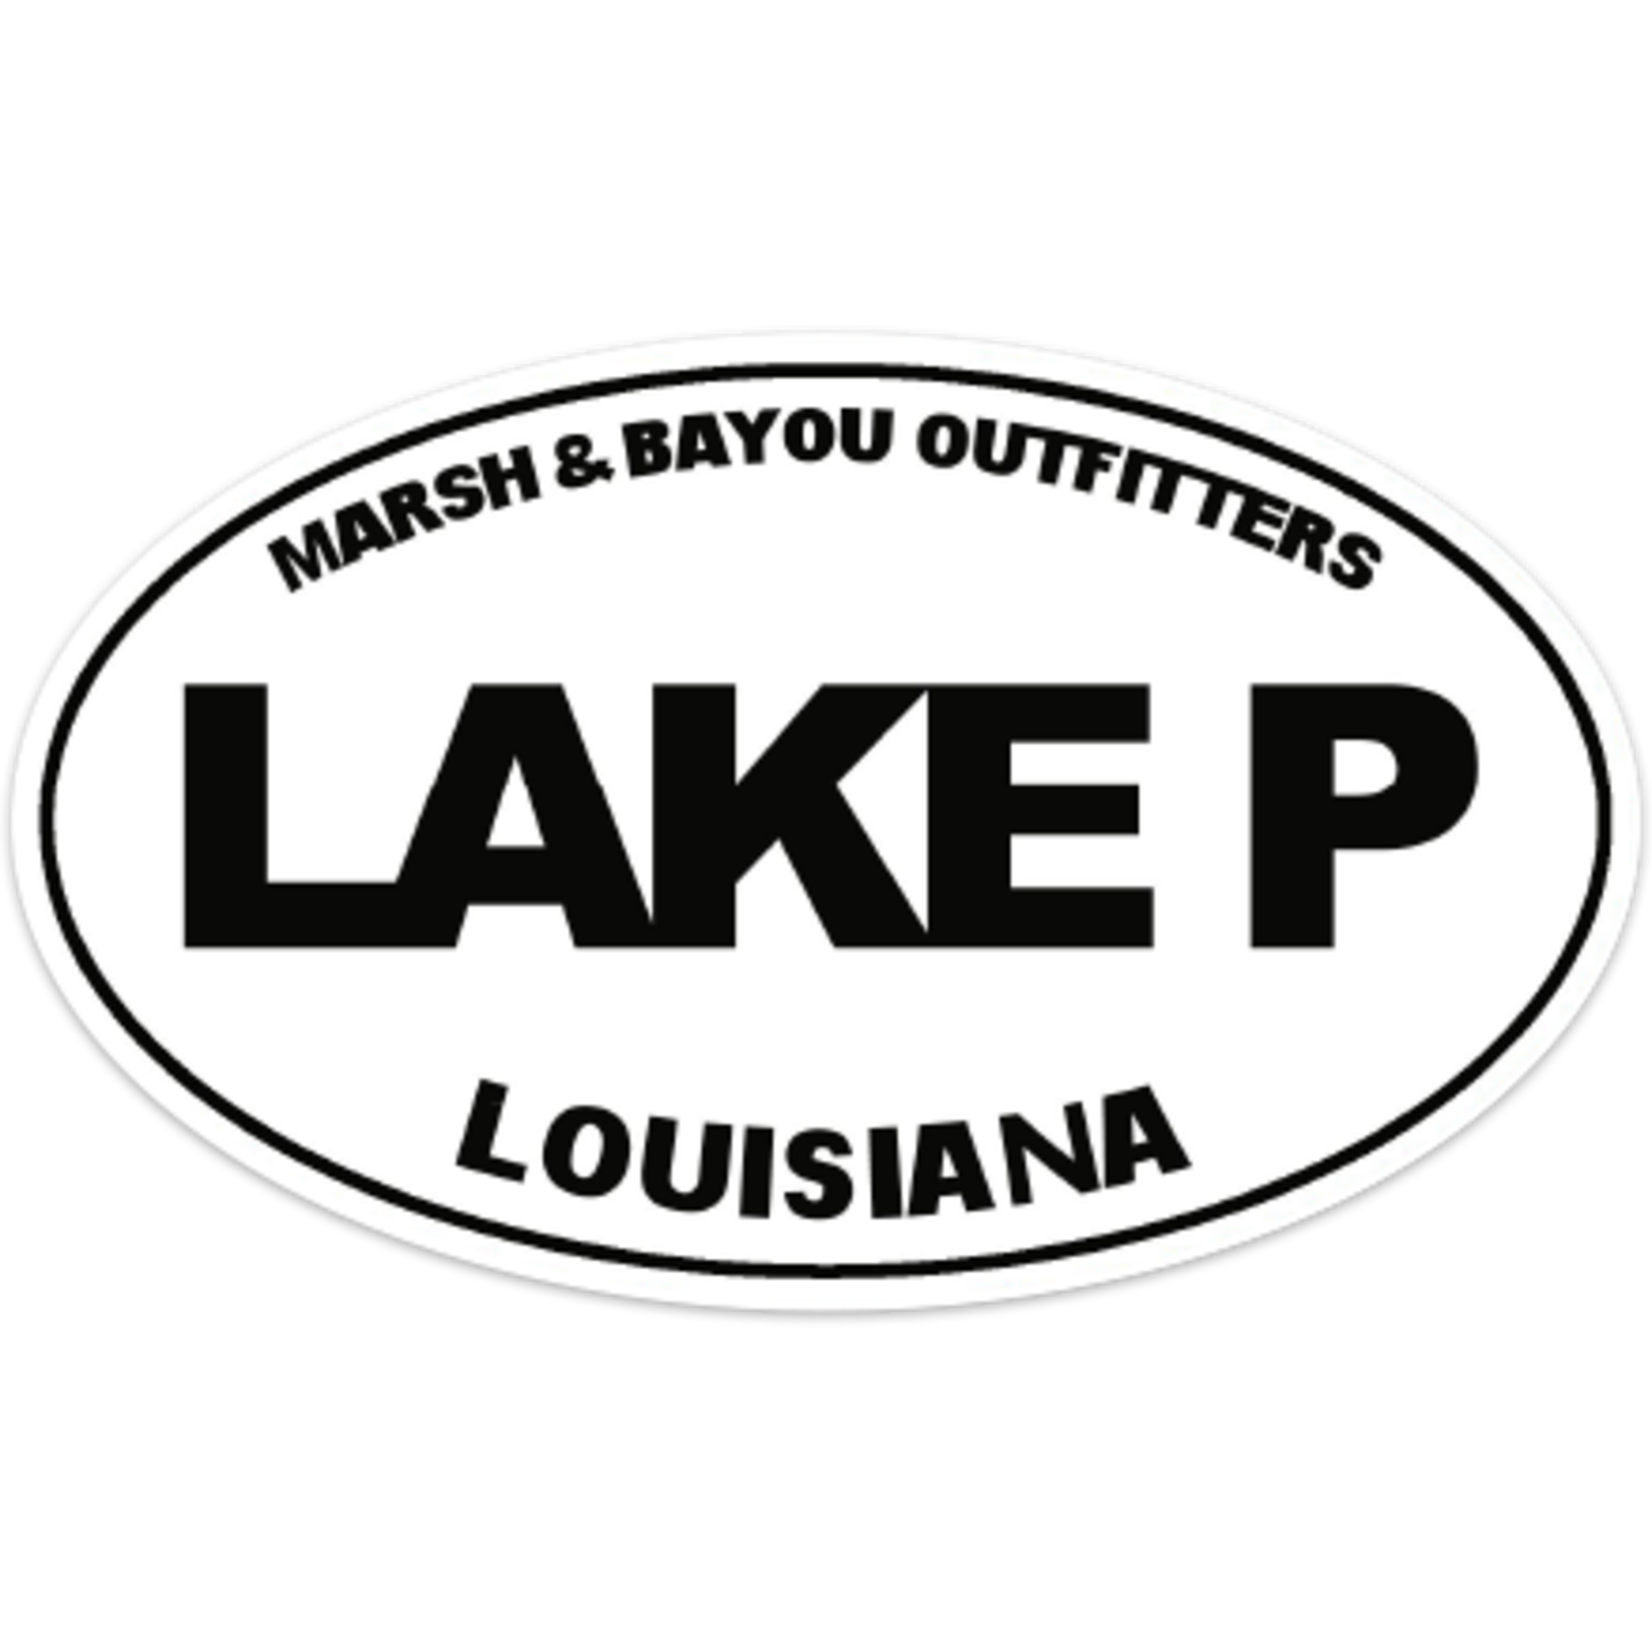 Marsh & Bayou Outfitters | Lake Pontchartrain Decal 5"